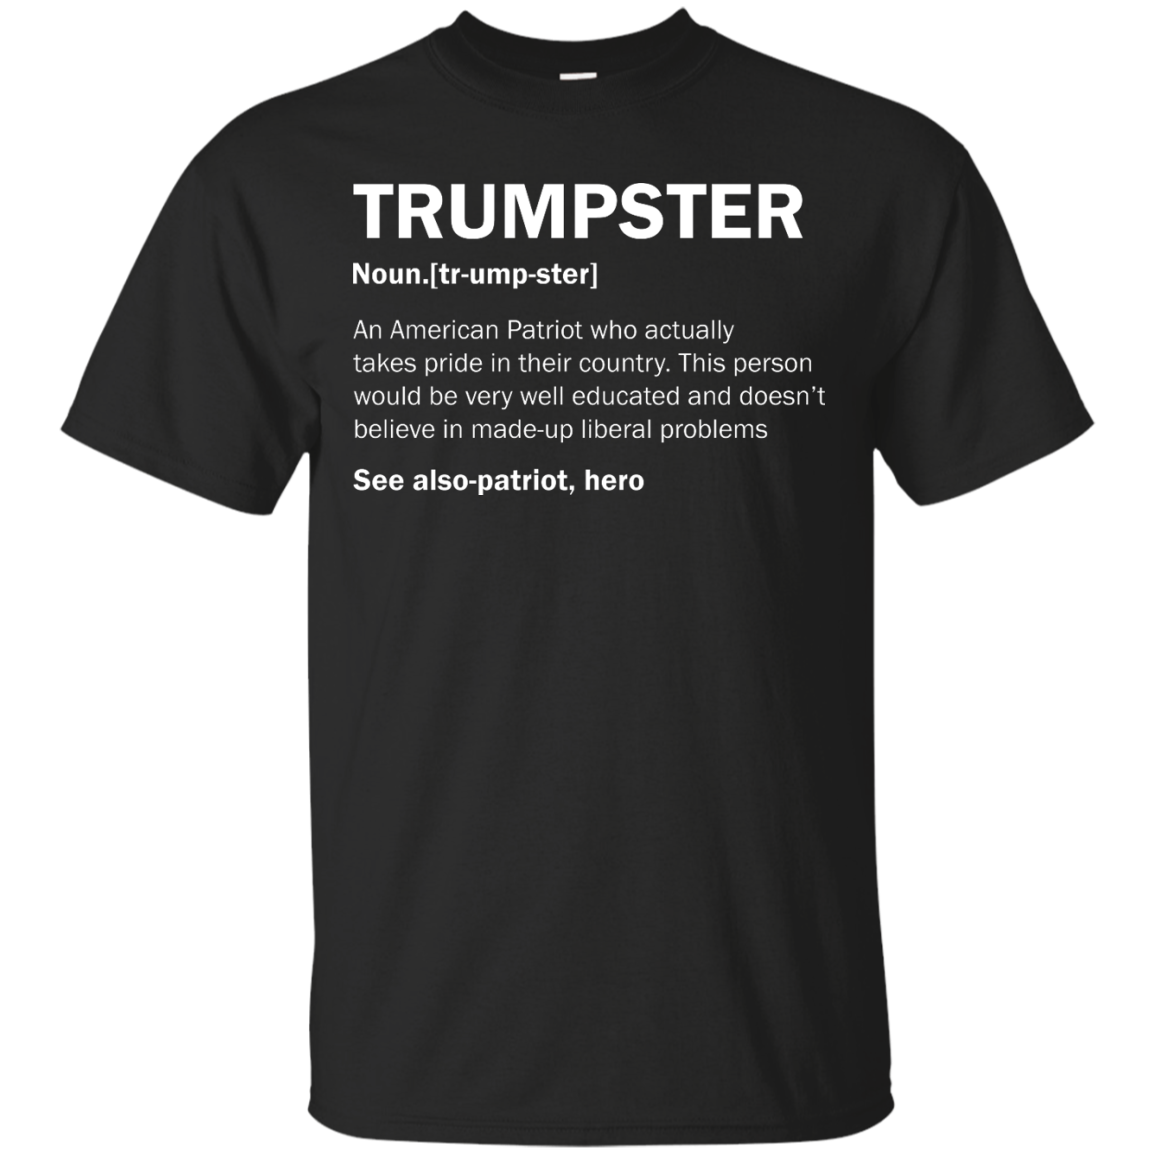 Trumpster definition t-shirt, tank, hoodie